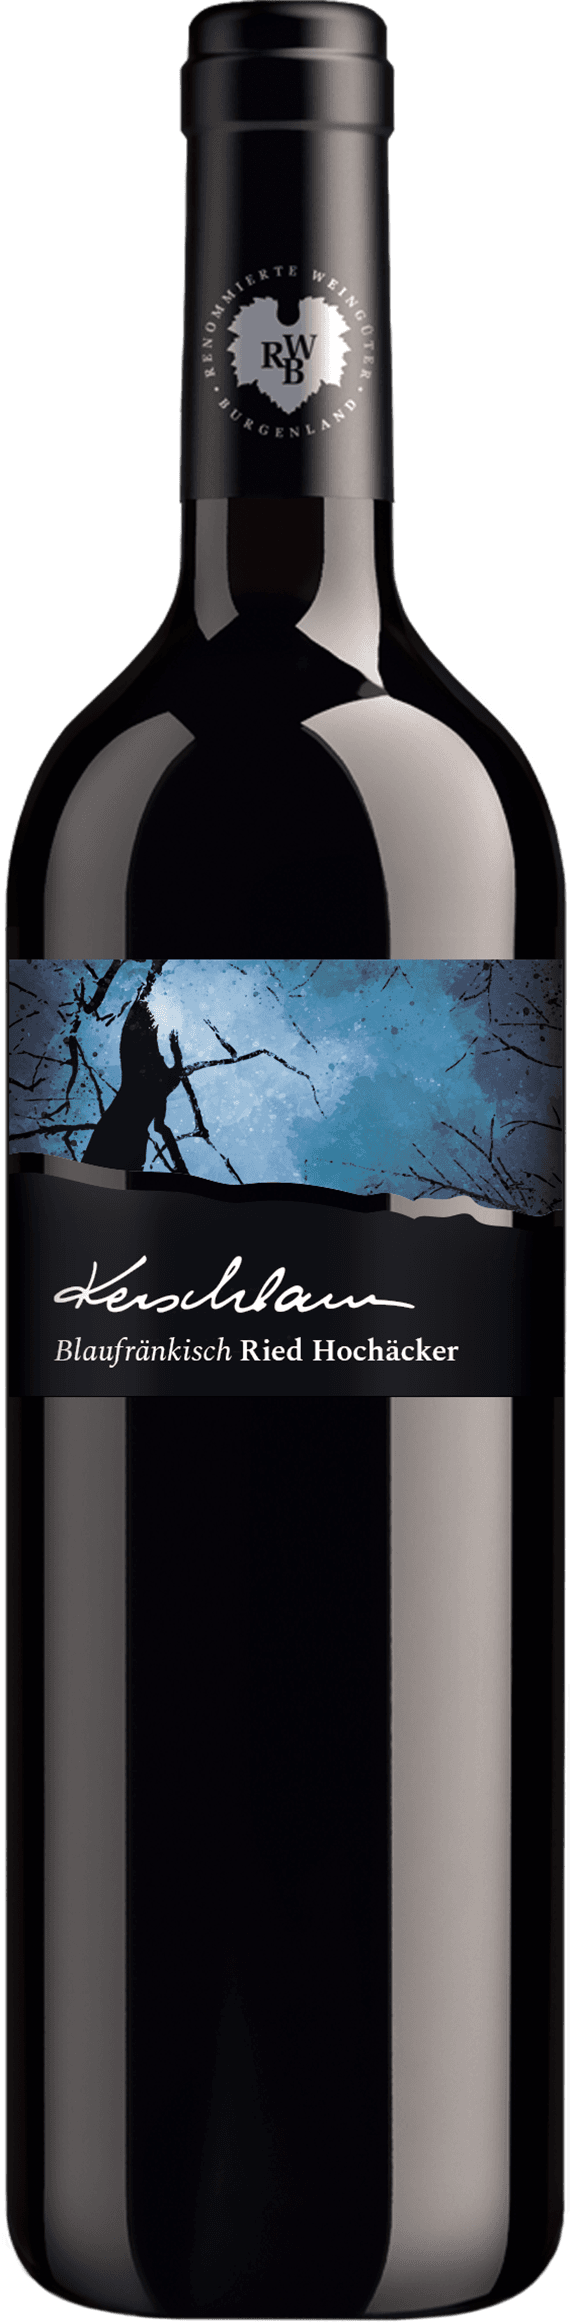 Blaufränkisch Hochäcker, Kerschbaum 2017 (0,75l)